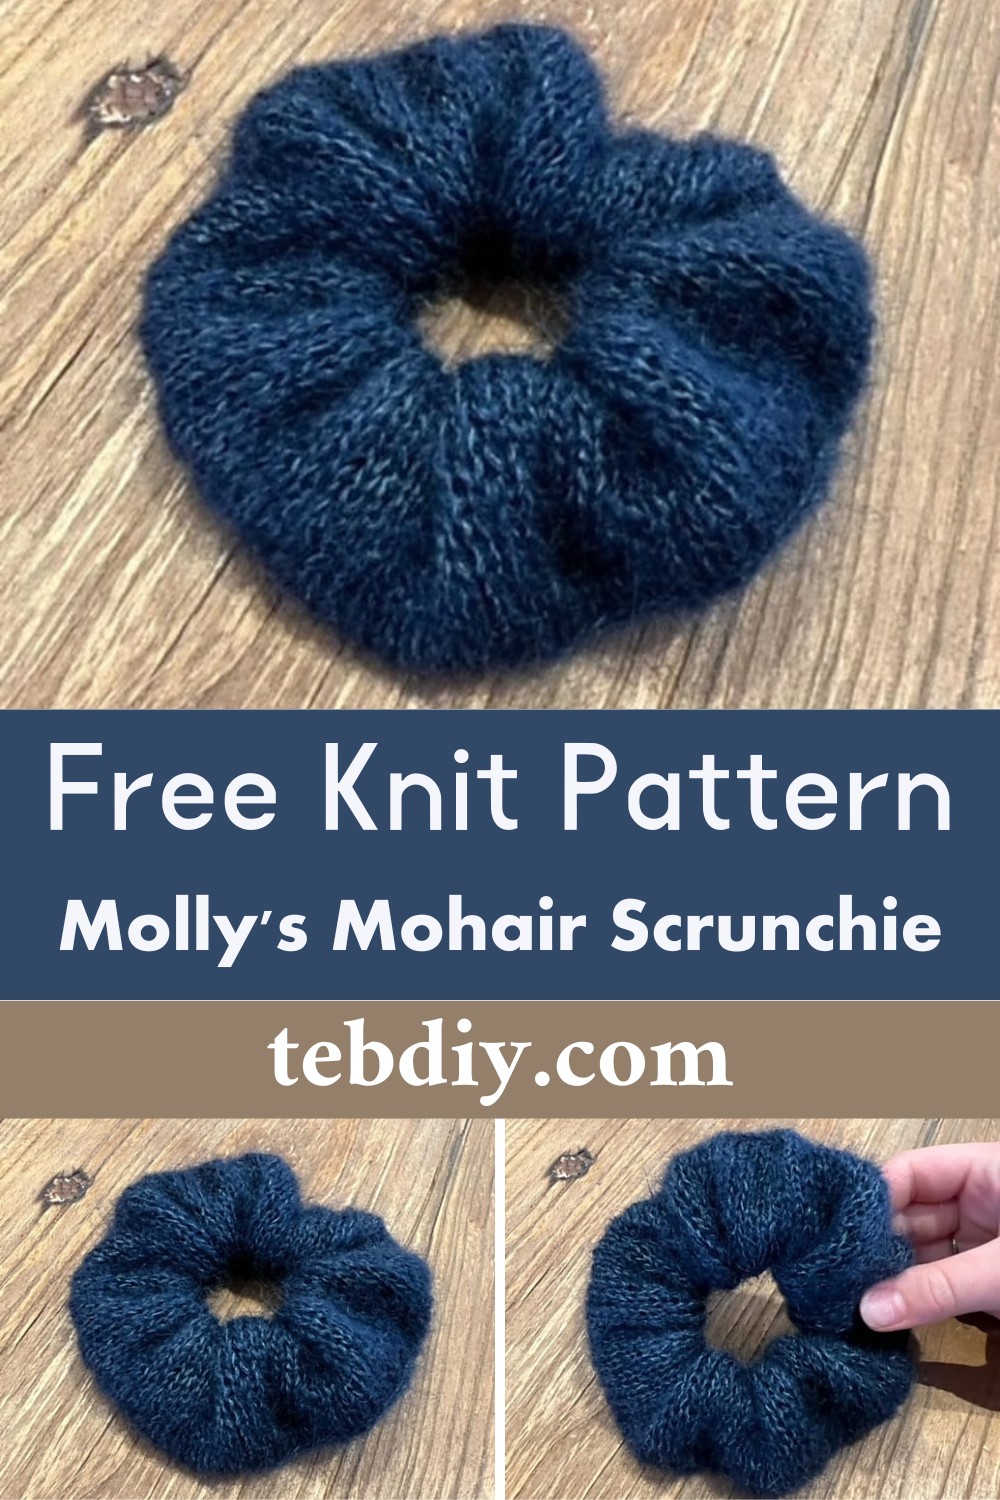 Molly's Mohair Scrunchie